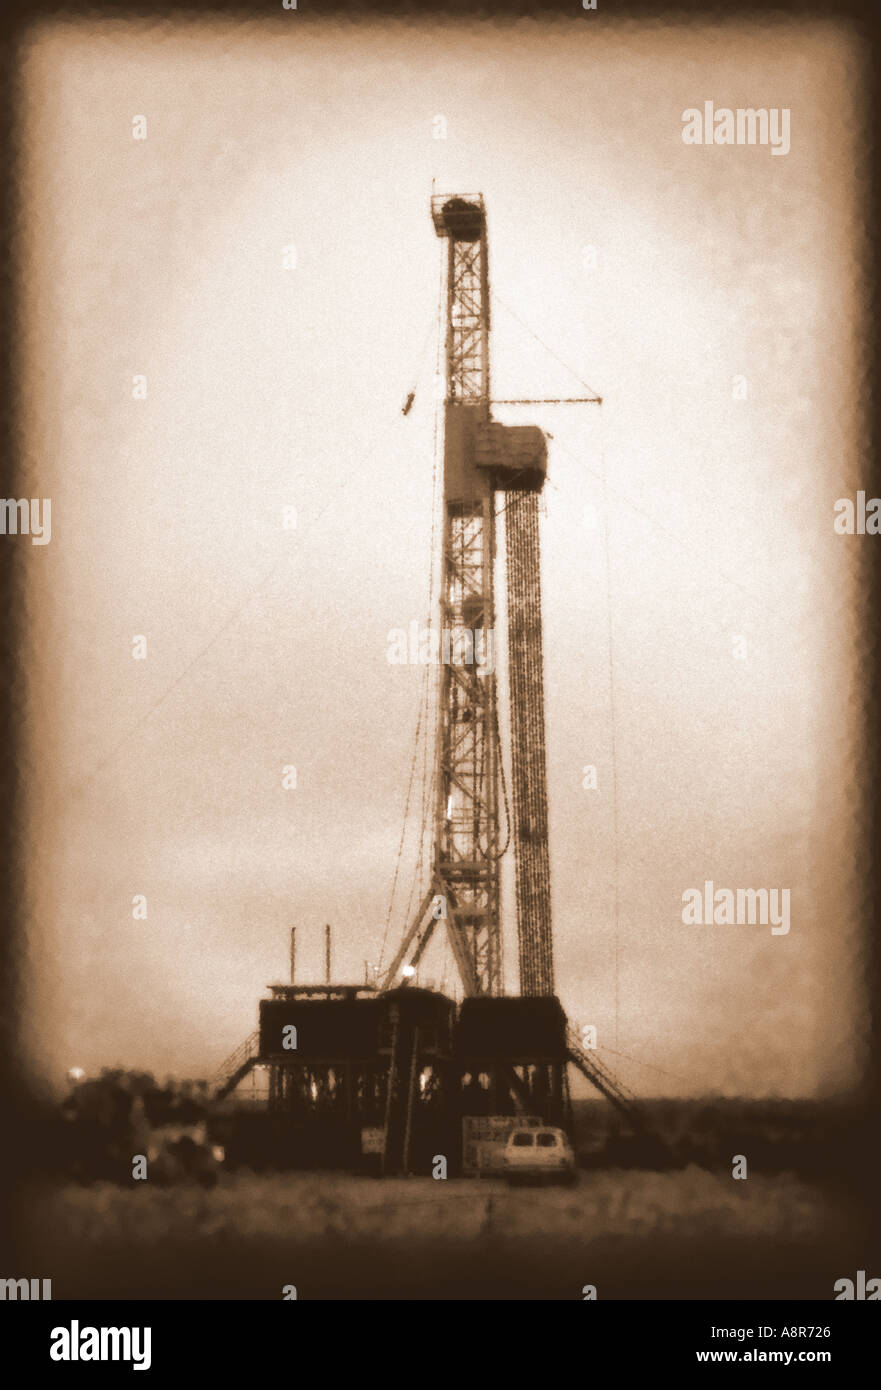 Oil Exploration Rig B&W version Stock Photo